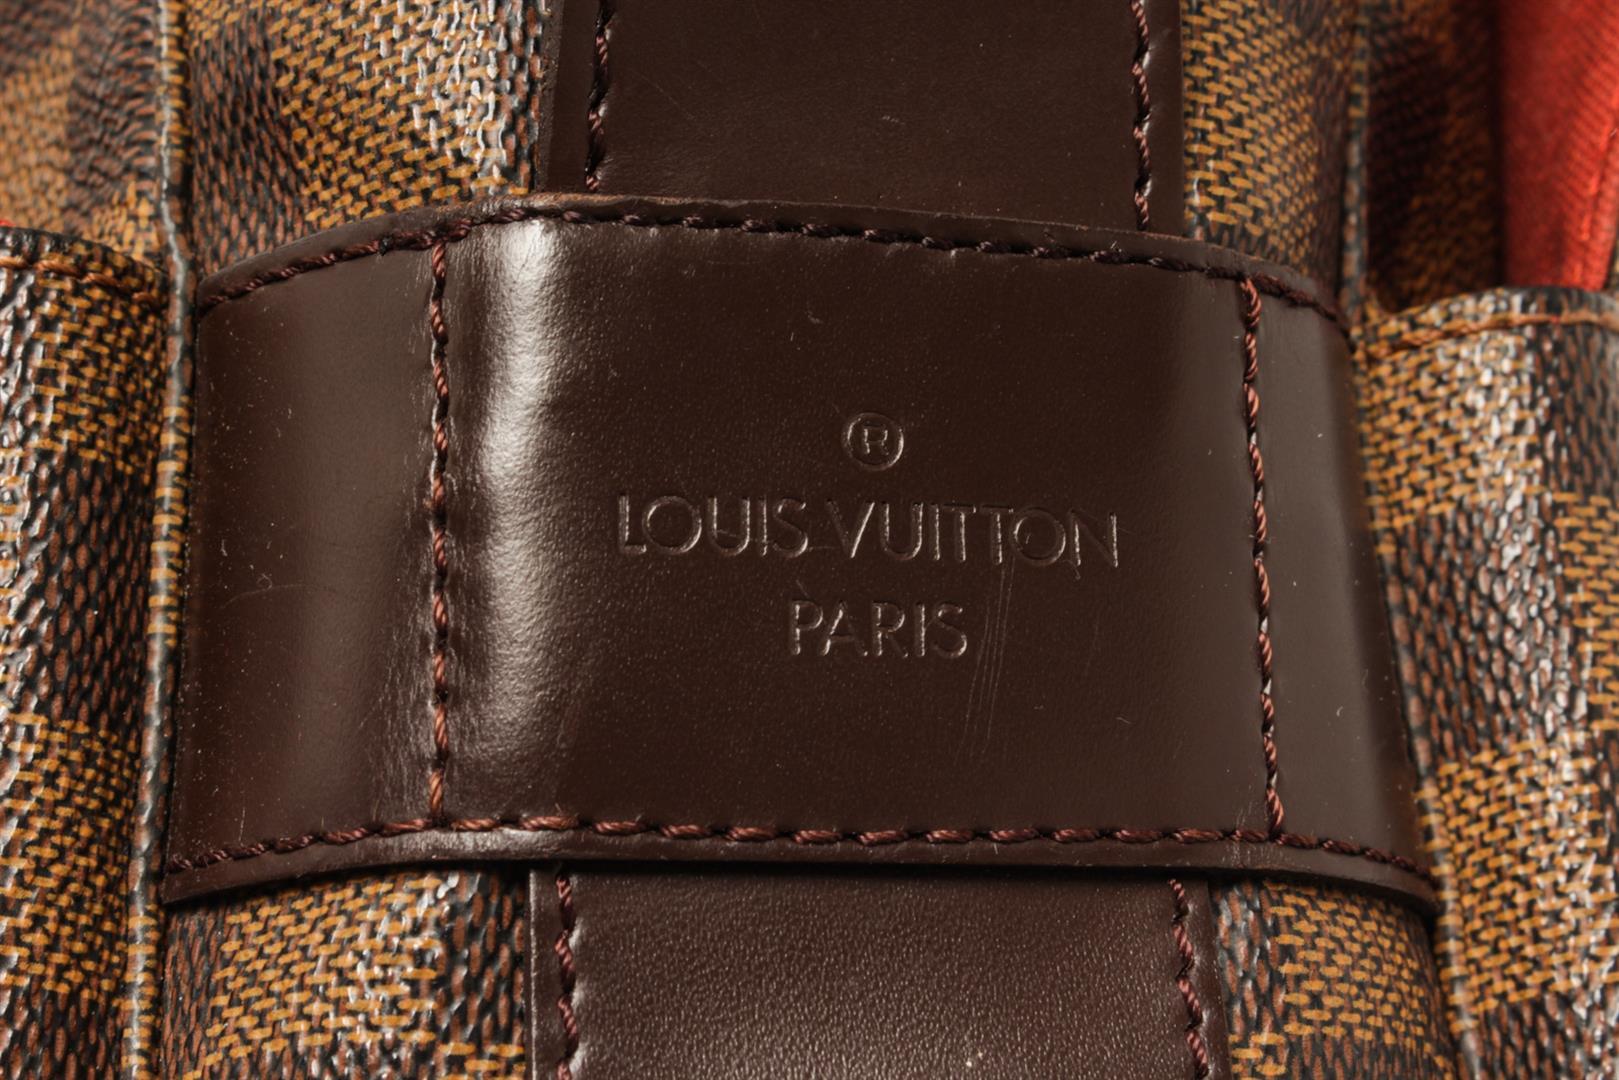 Louis Vuitton Damier Ebene Canvas Naviglio Shoulder Bag